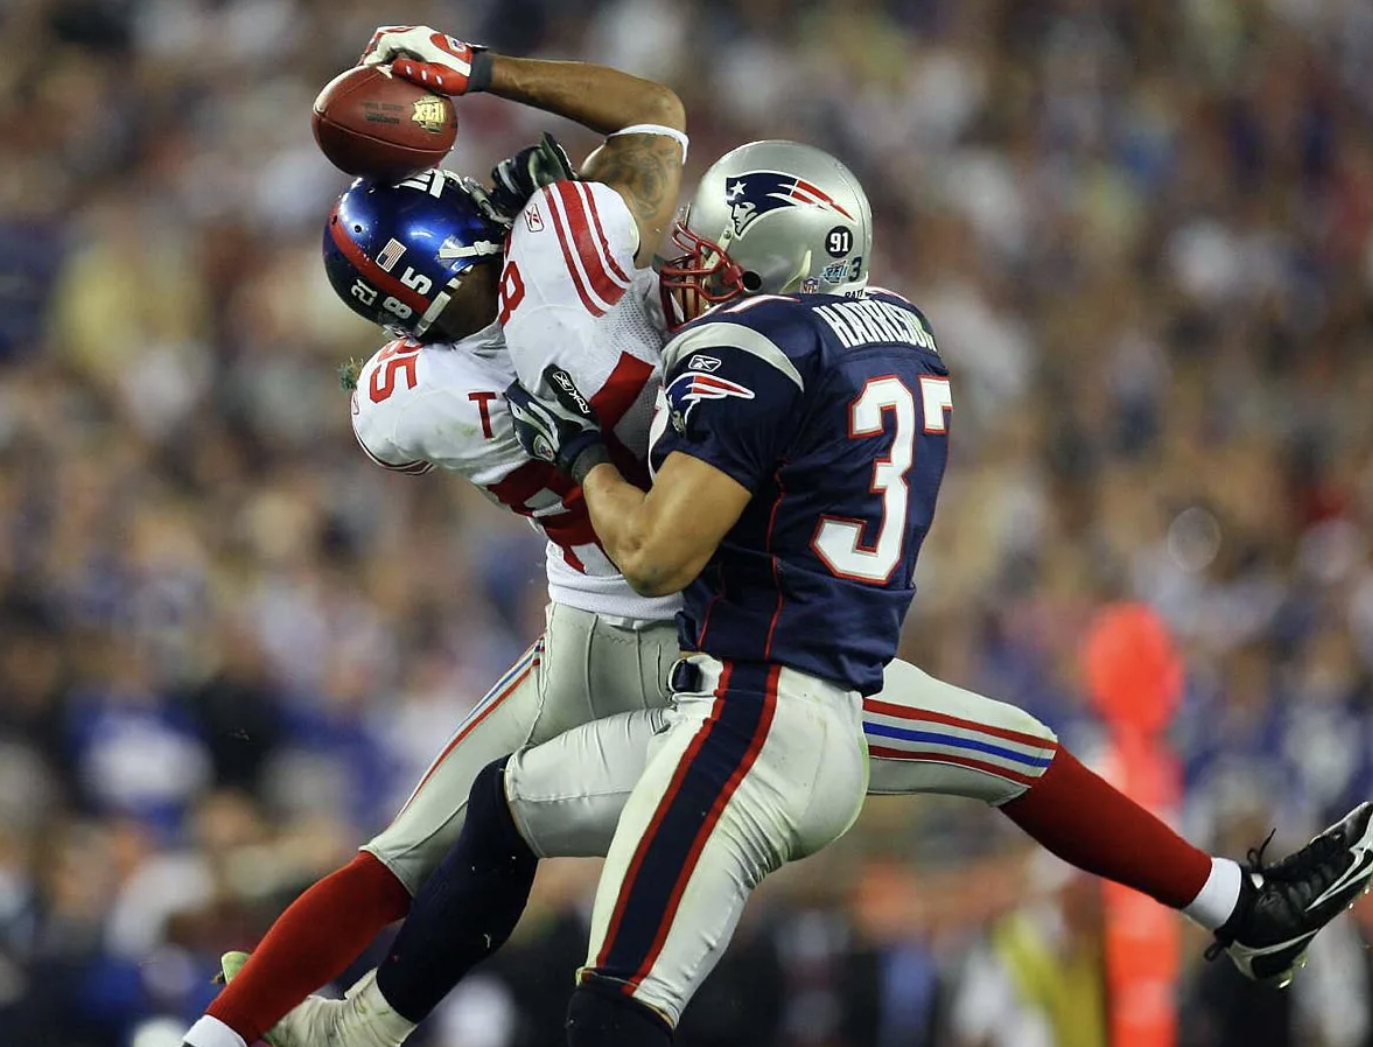 David Tyree 'helmet catch' against Rodney Harrison. Super Bowl XLII 2008. Giants beat Patriots 17-14. Photo by: Damian Strohmeyer.